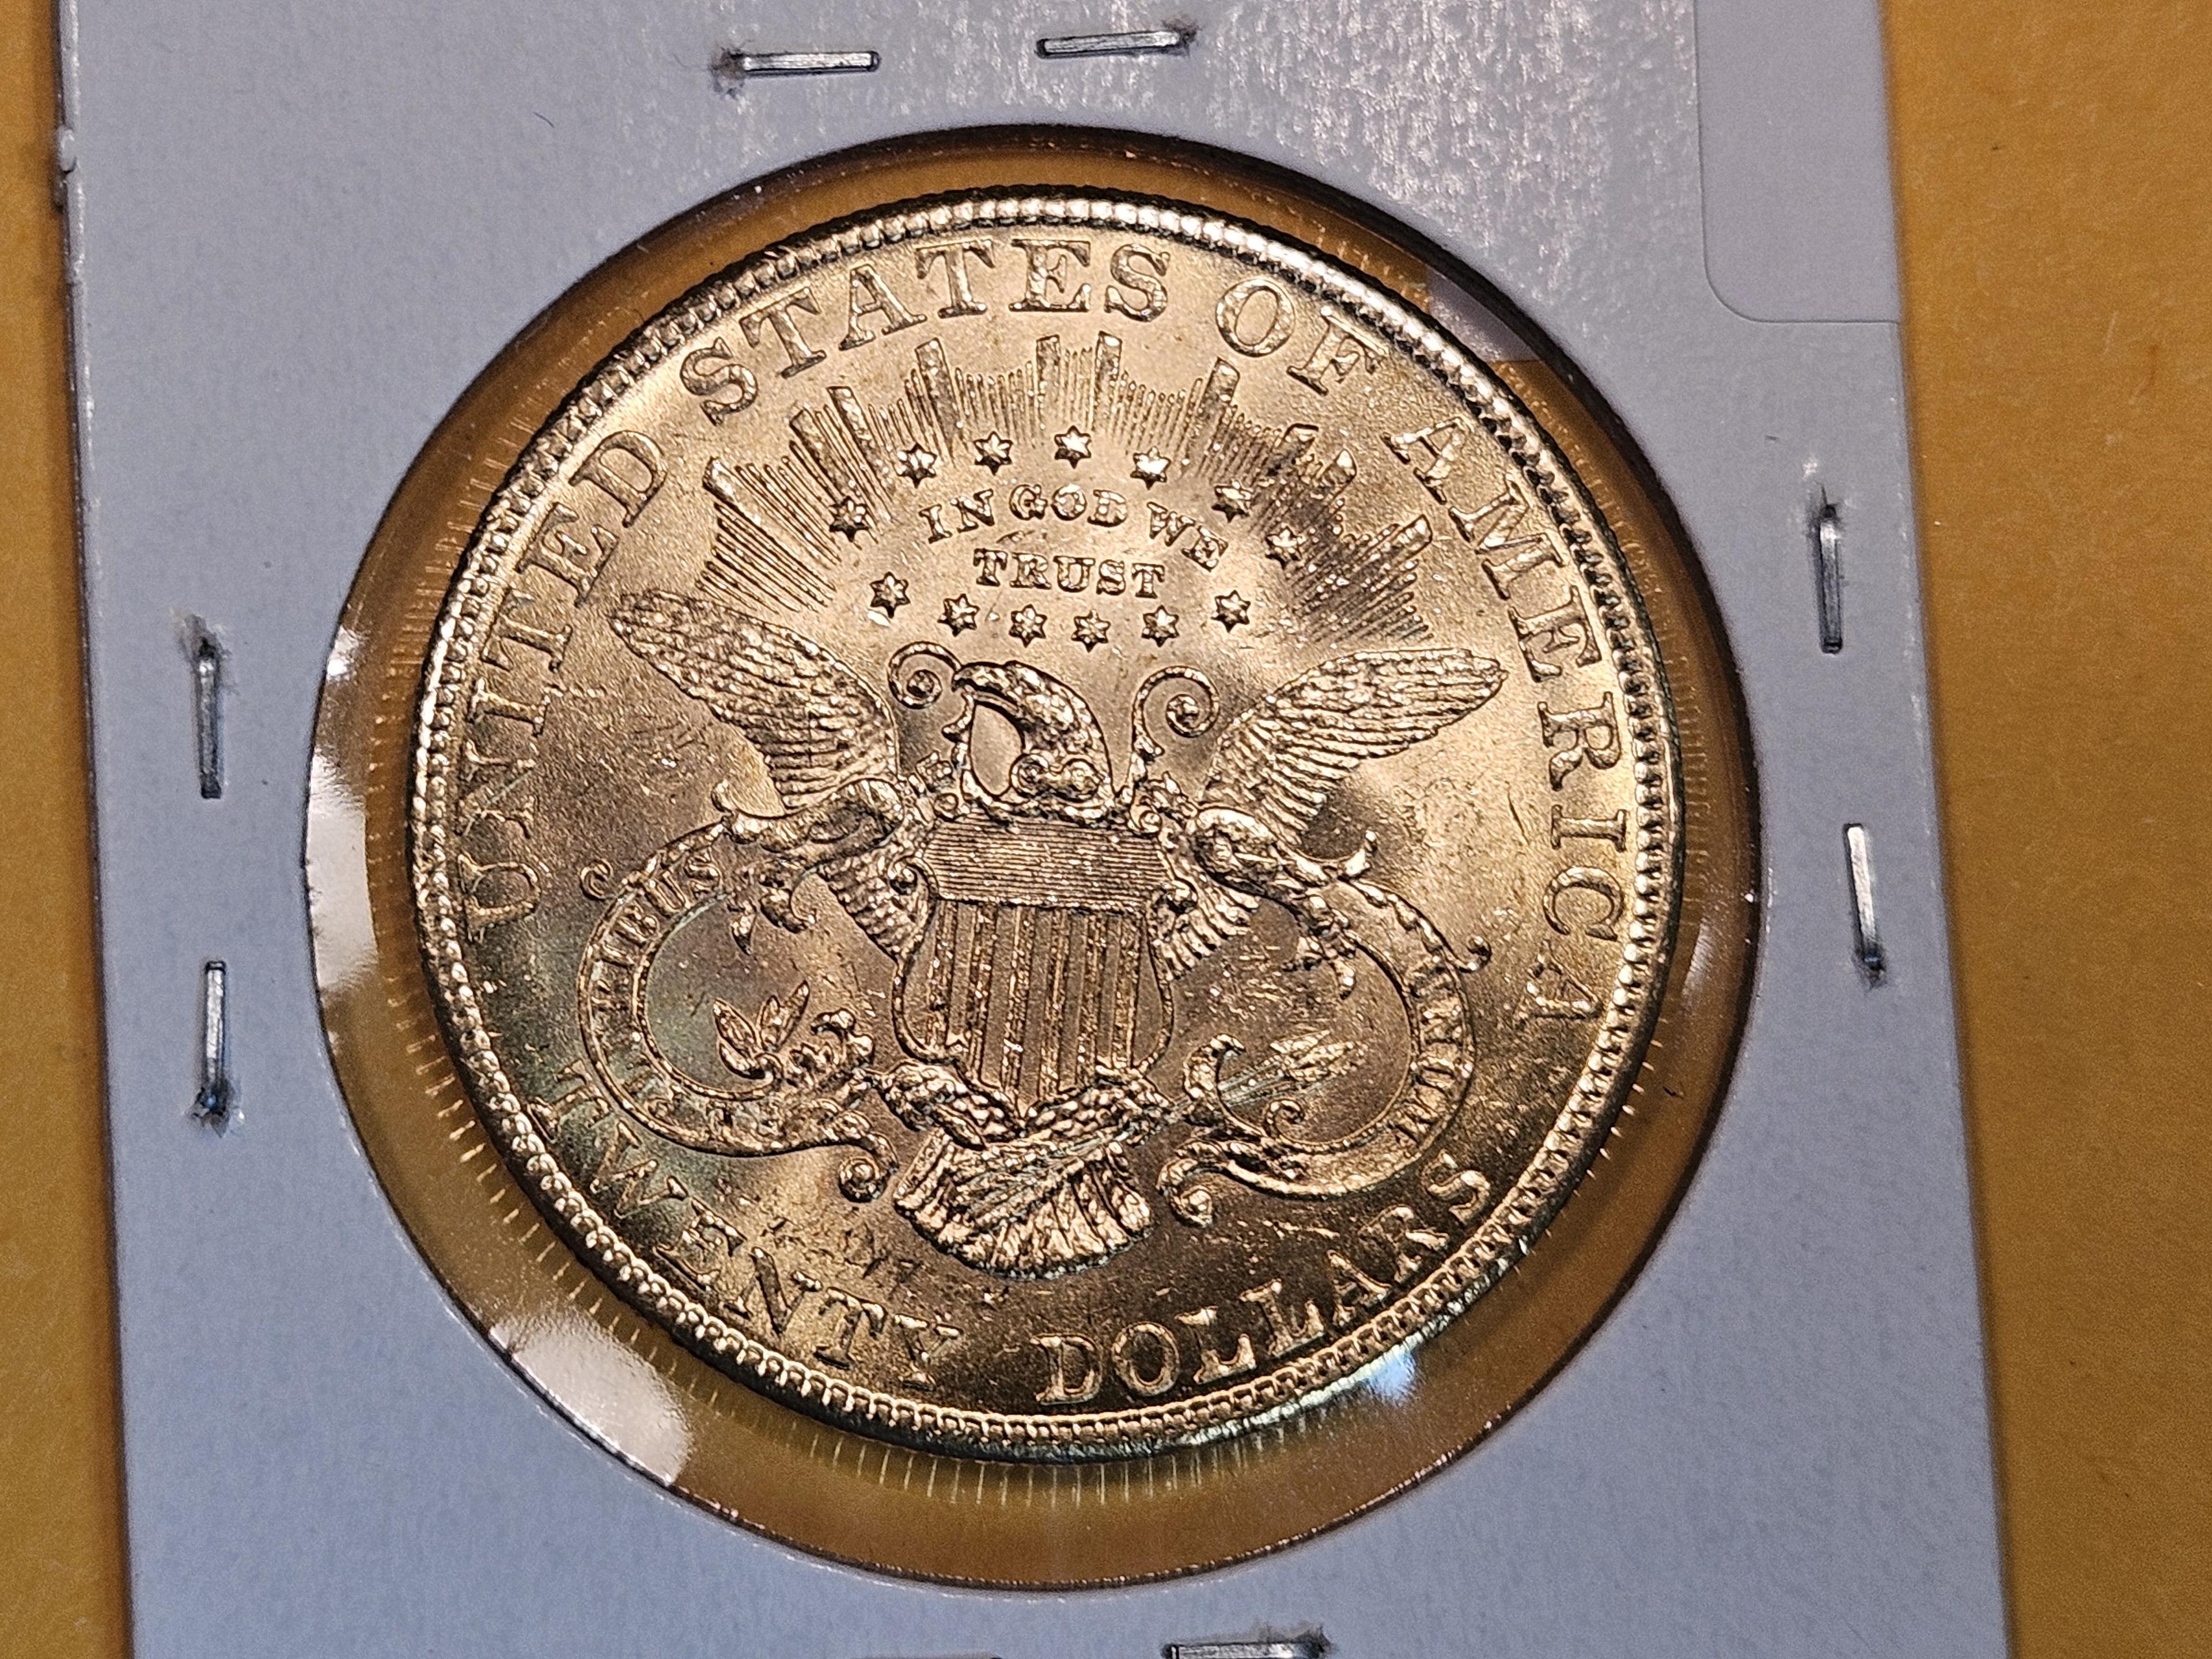 GOLD! Brilliant Uncirculated plus 1907 Liberty Head Gold Twenty Dollars